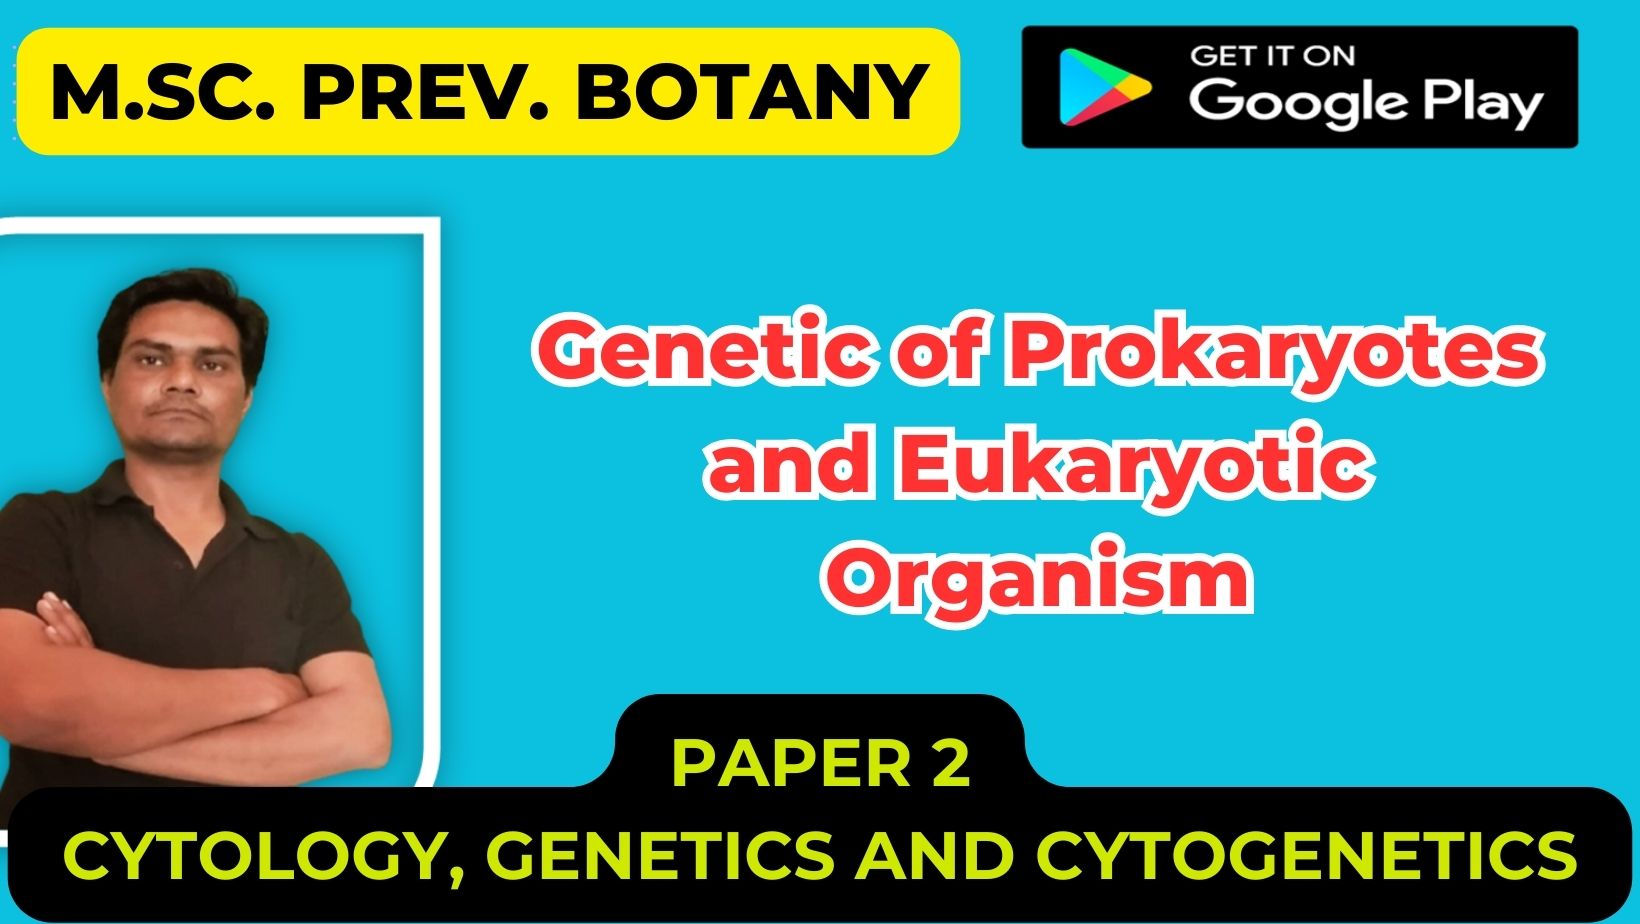 Genetic of Prokaryotes and Eukaryotic Organism